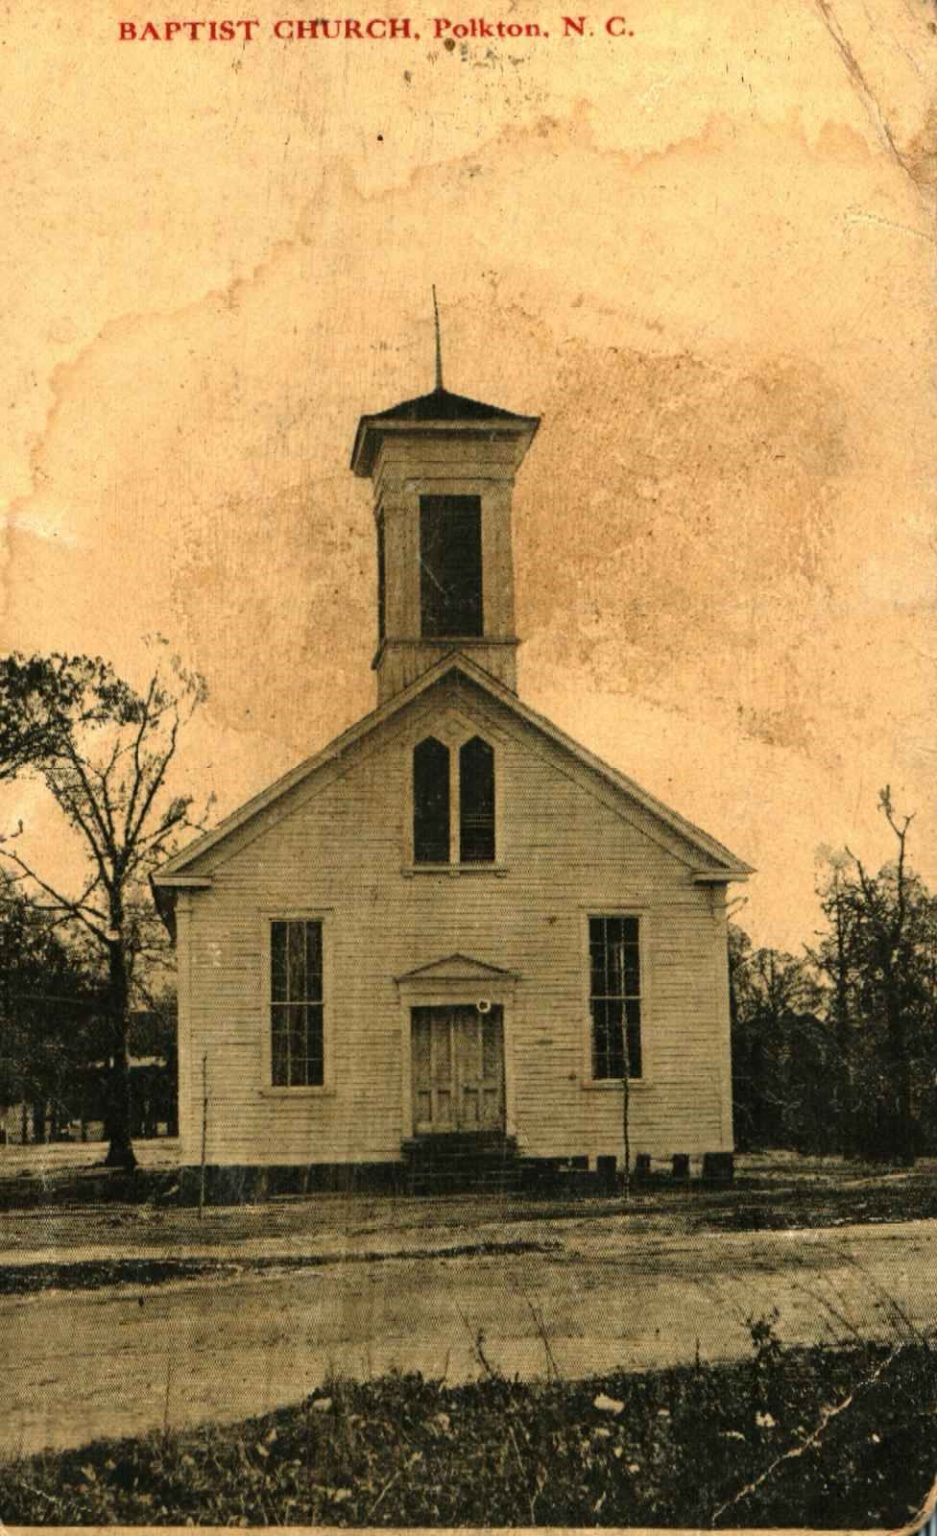 Polkton Baptist Church | Florida Baptist Historical Society